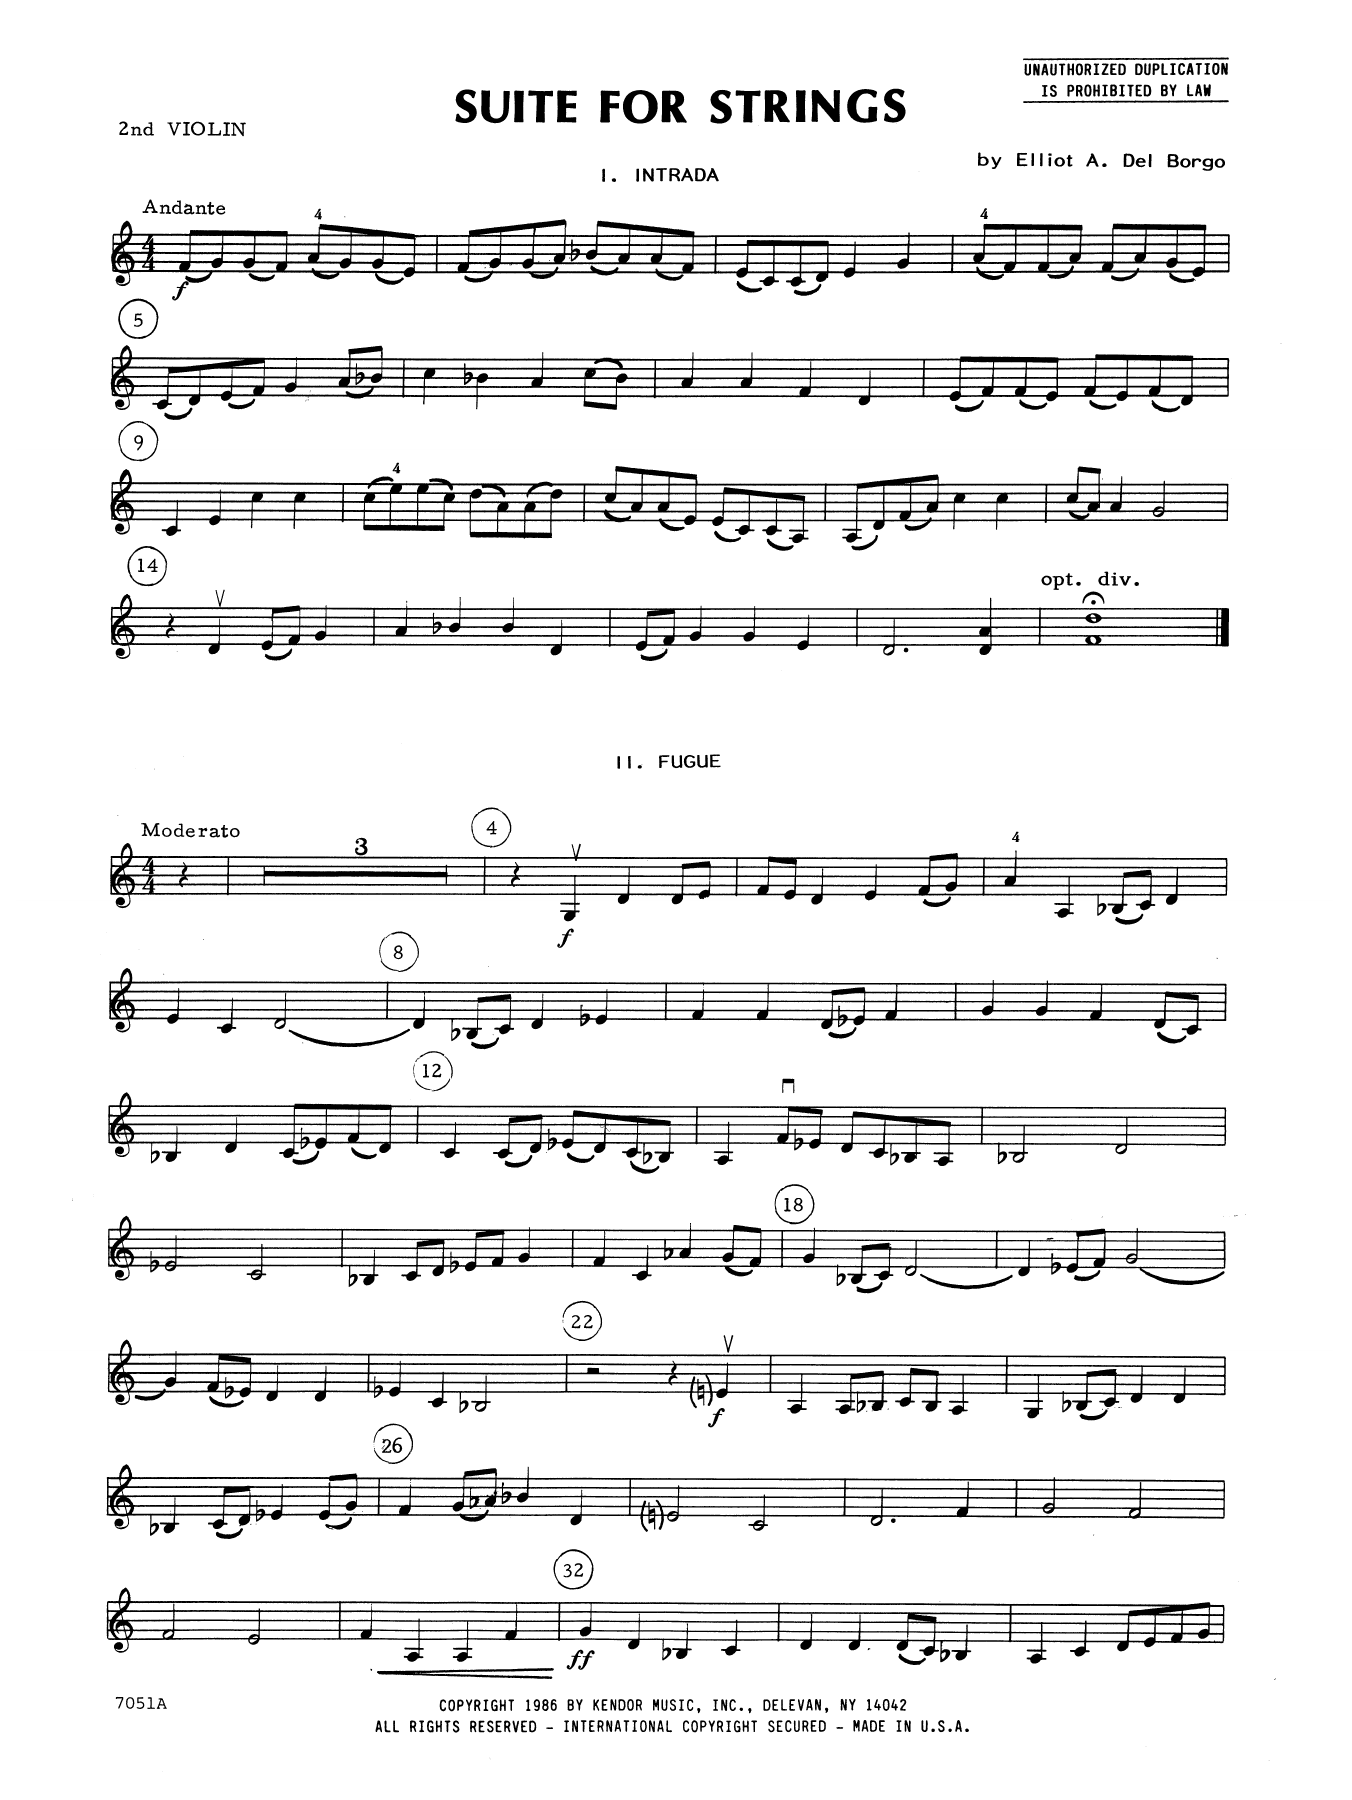 Download Elliot A. Del Borgo Suite for Strings - 2nd Violin Sheet Music